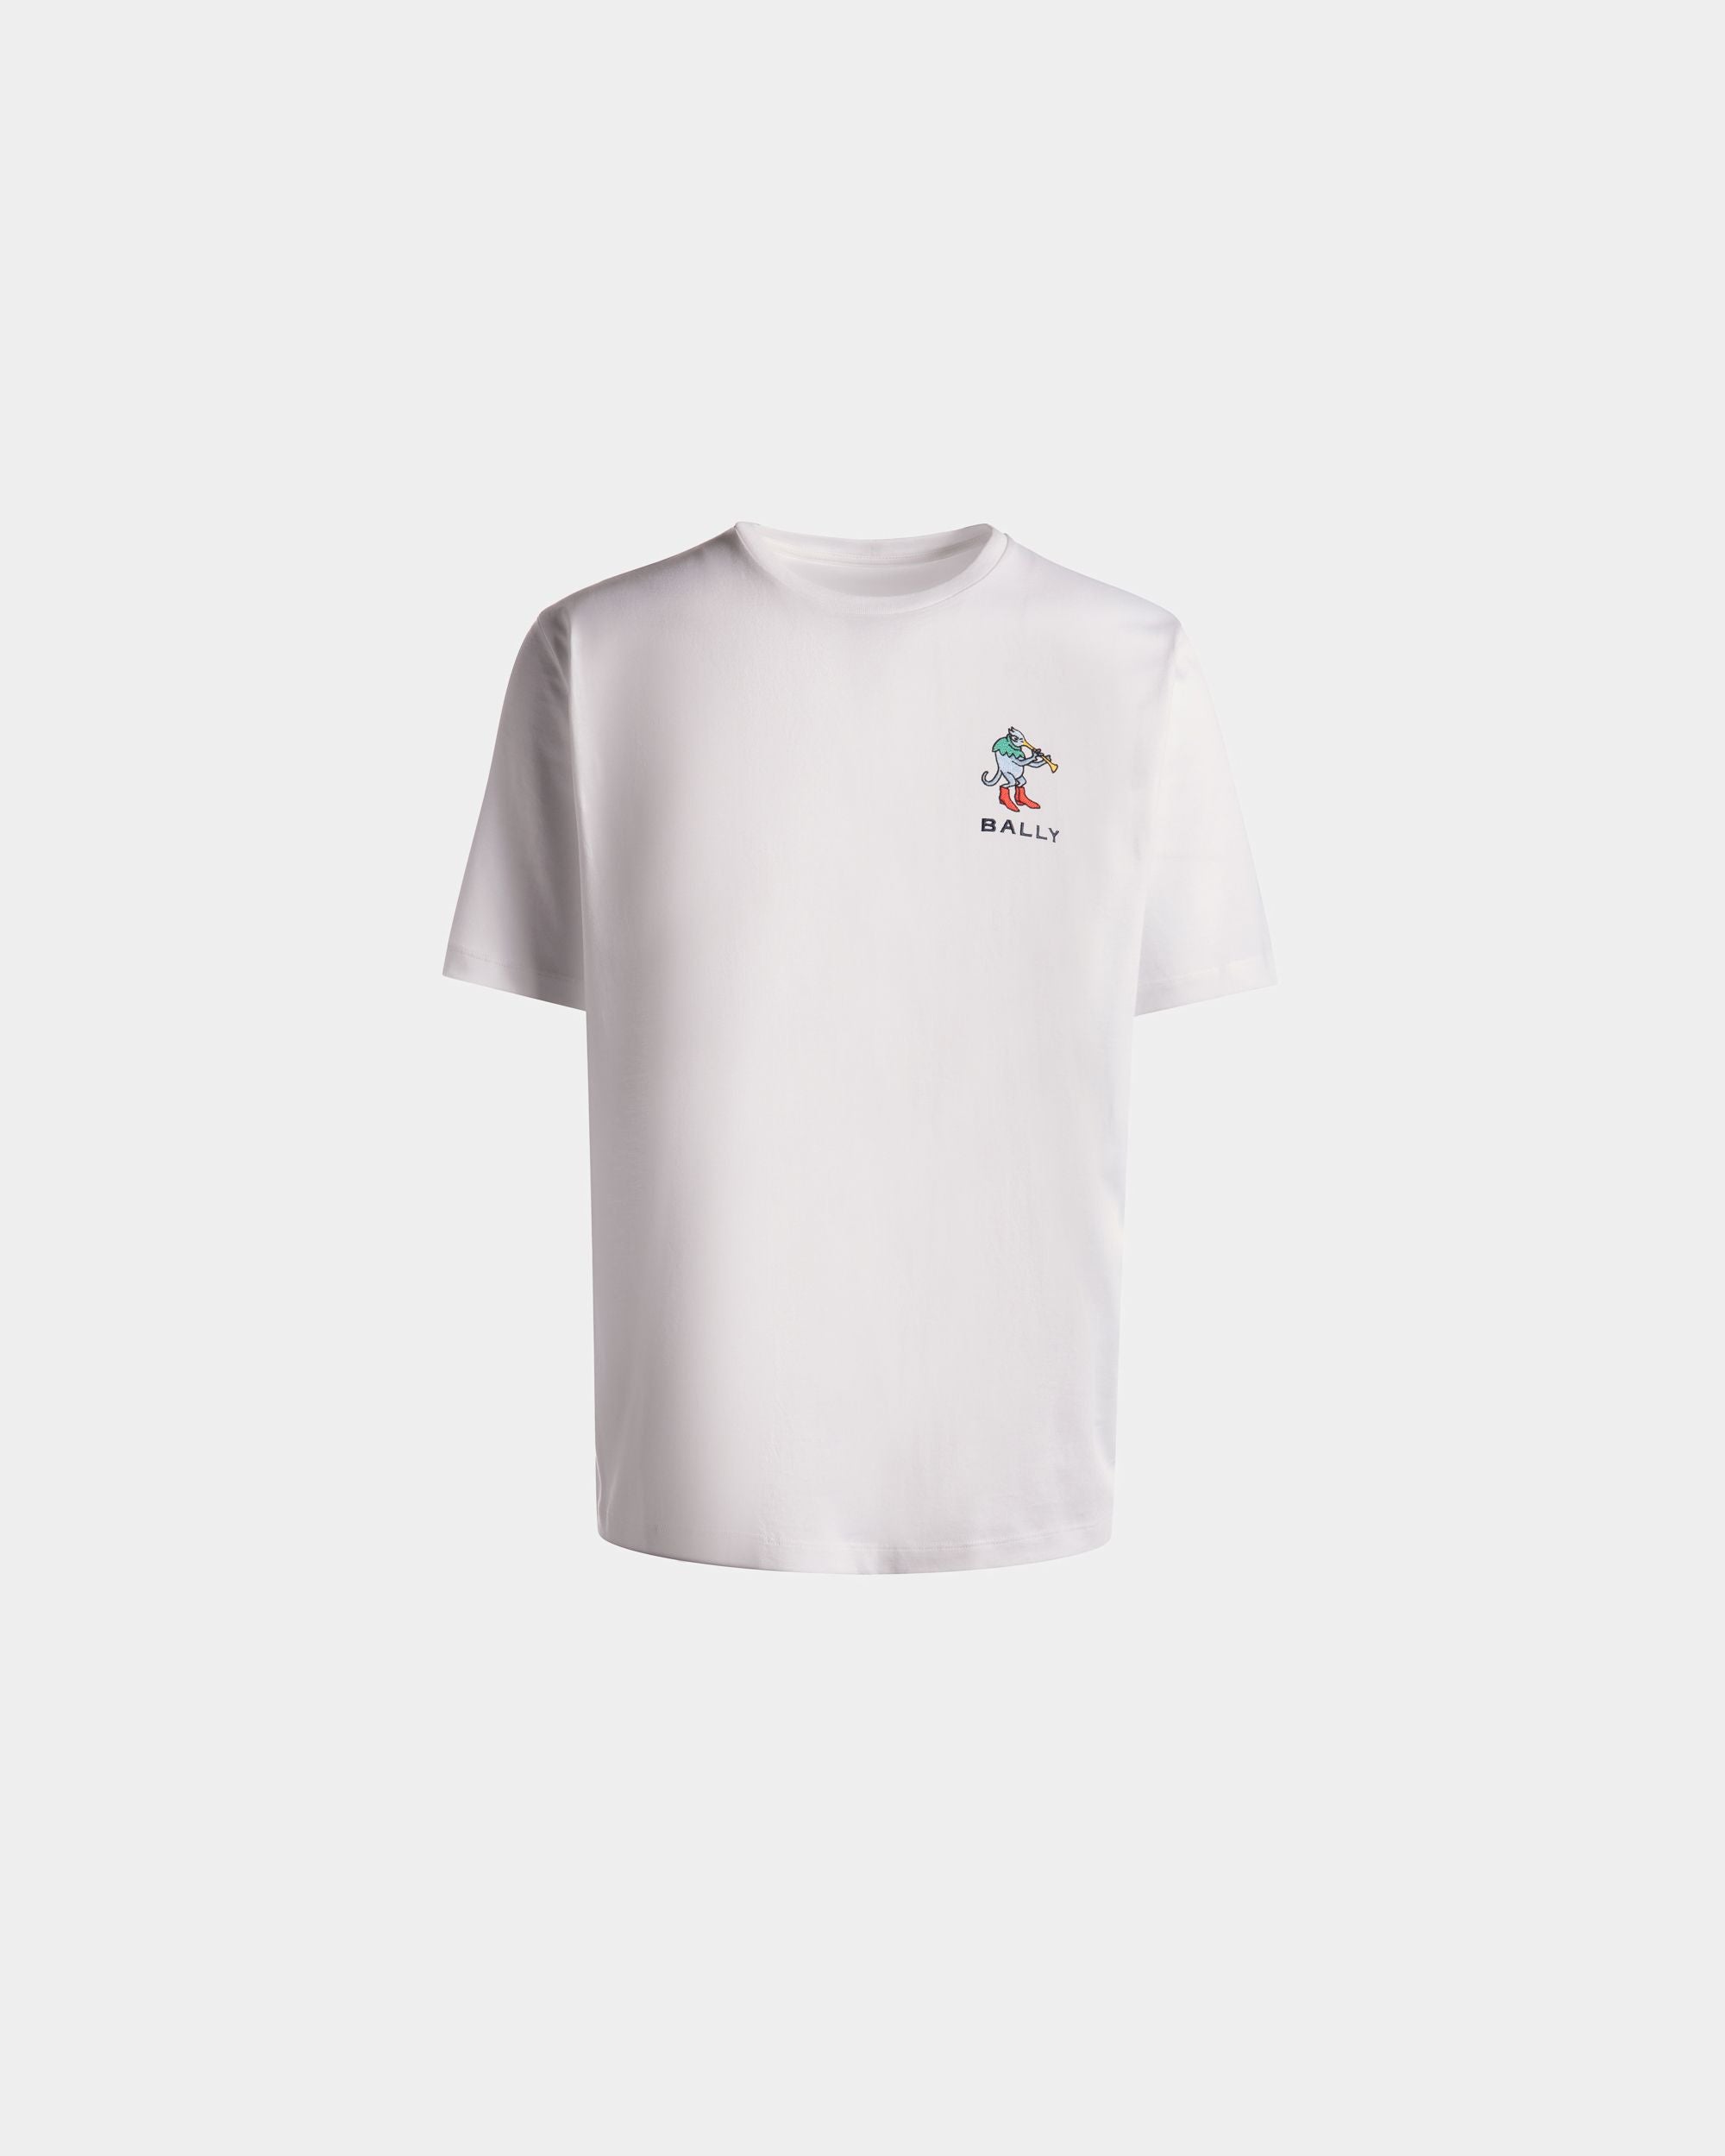 Men's T-Shirt in White Cotton | Bally | Still Life Front